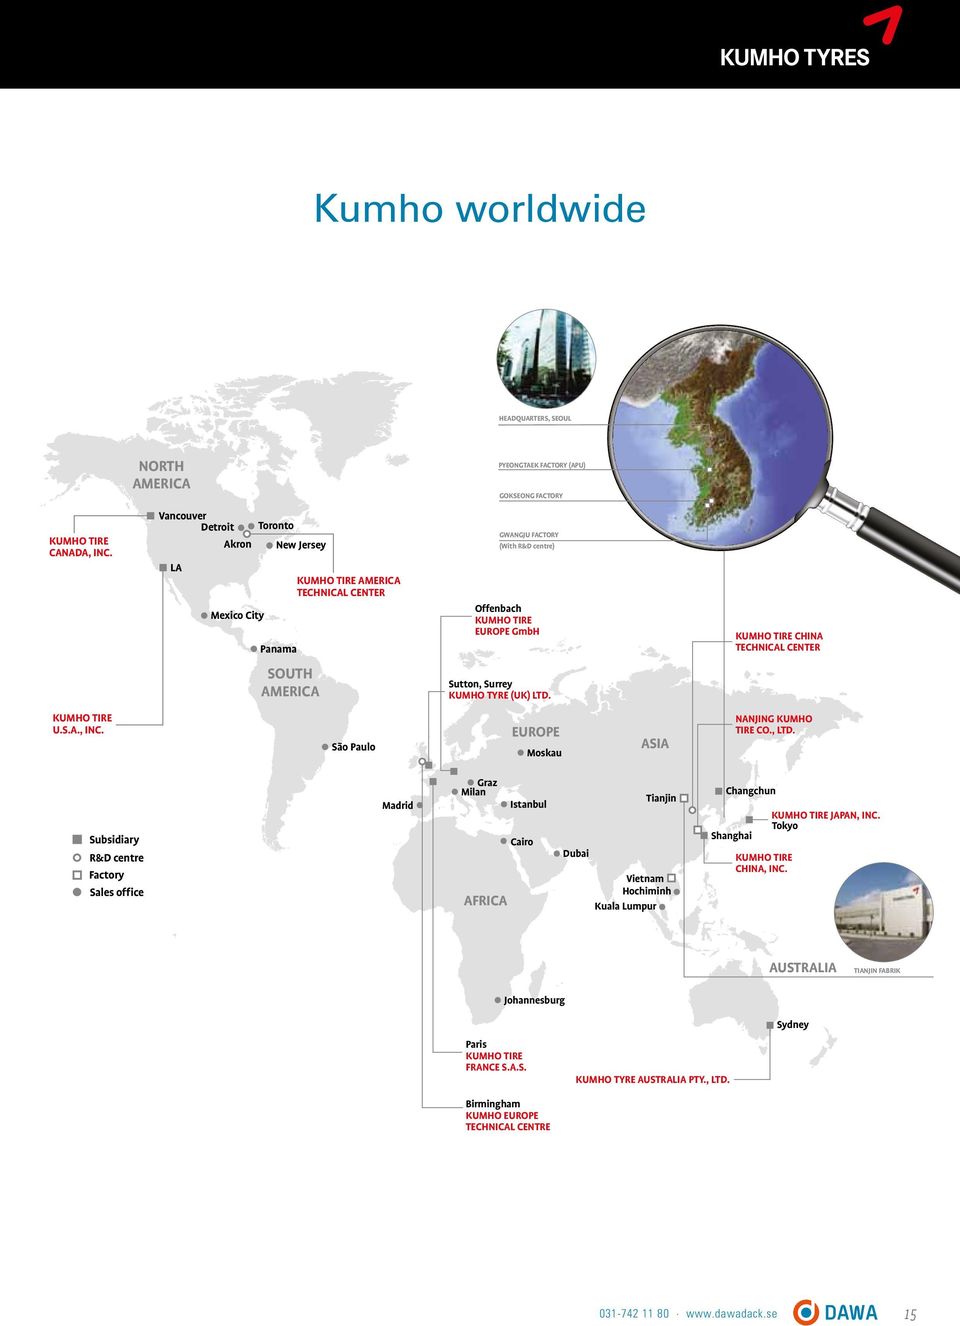 Germany and Europe. Kumho worldwide y re ce HEADQUARTERS, SEOUL NORTH AMERICA Kumho worldwide KUMHO TIRE CANADA, INC. 180 countries.